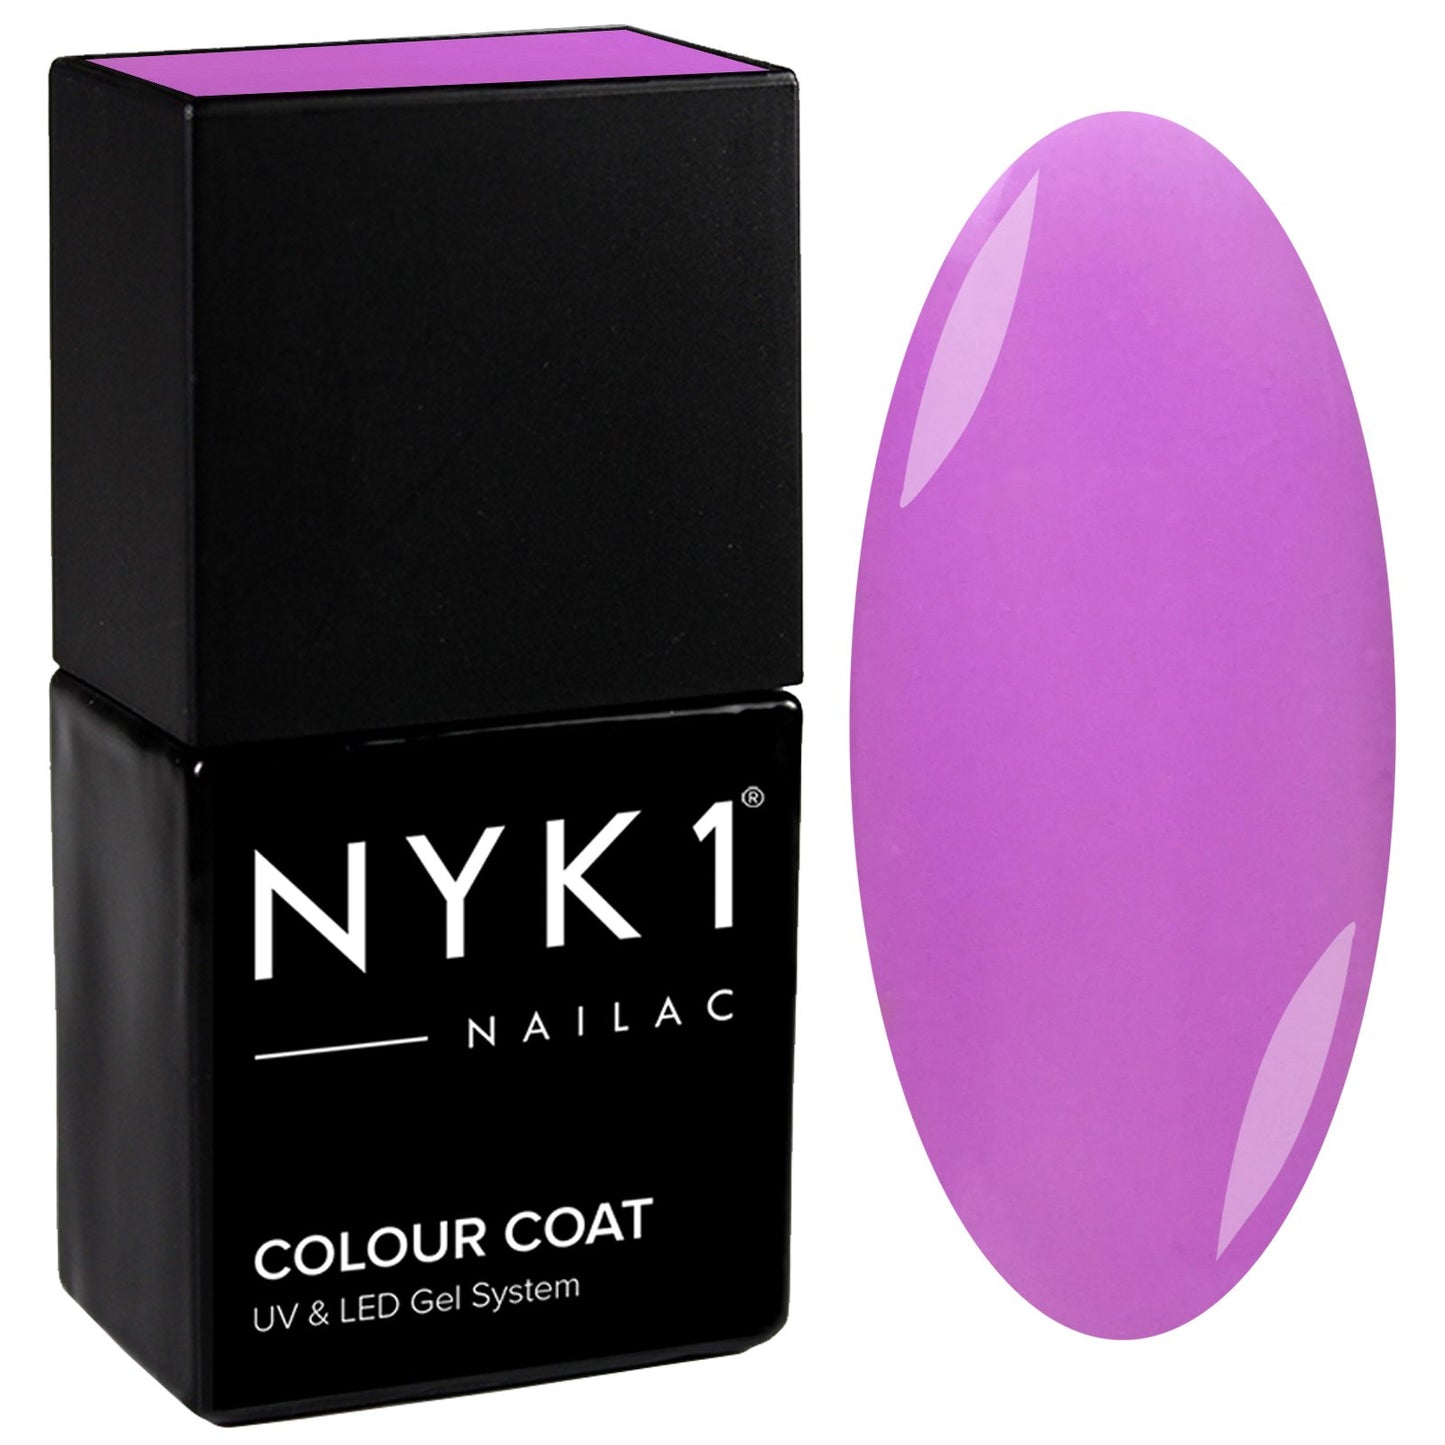 NYK1 Nailac Violetta Light Purple Gel Nail Polish